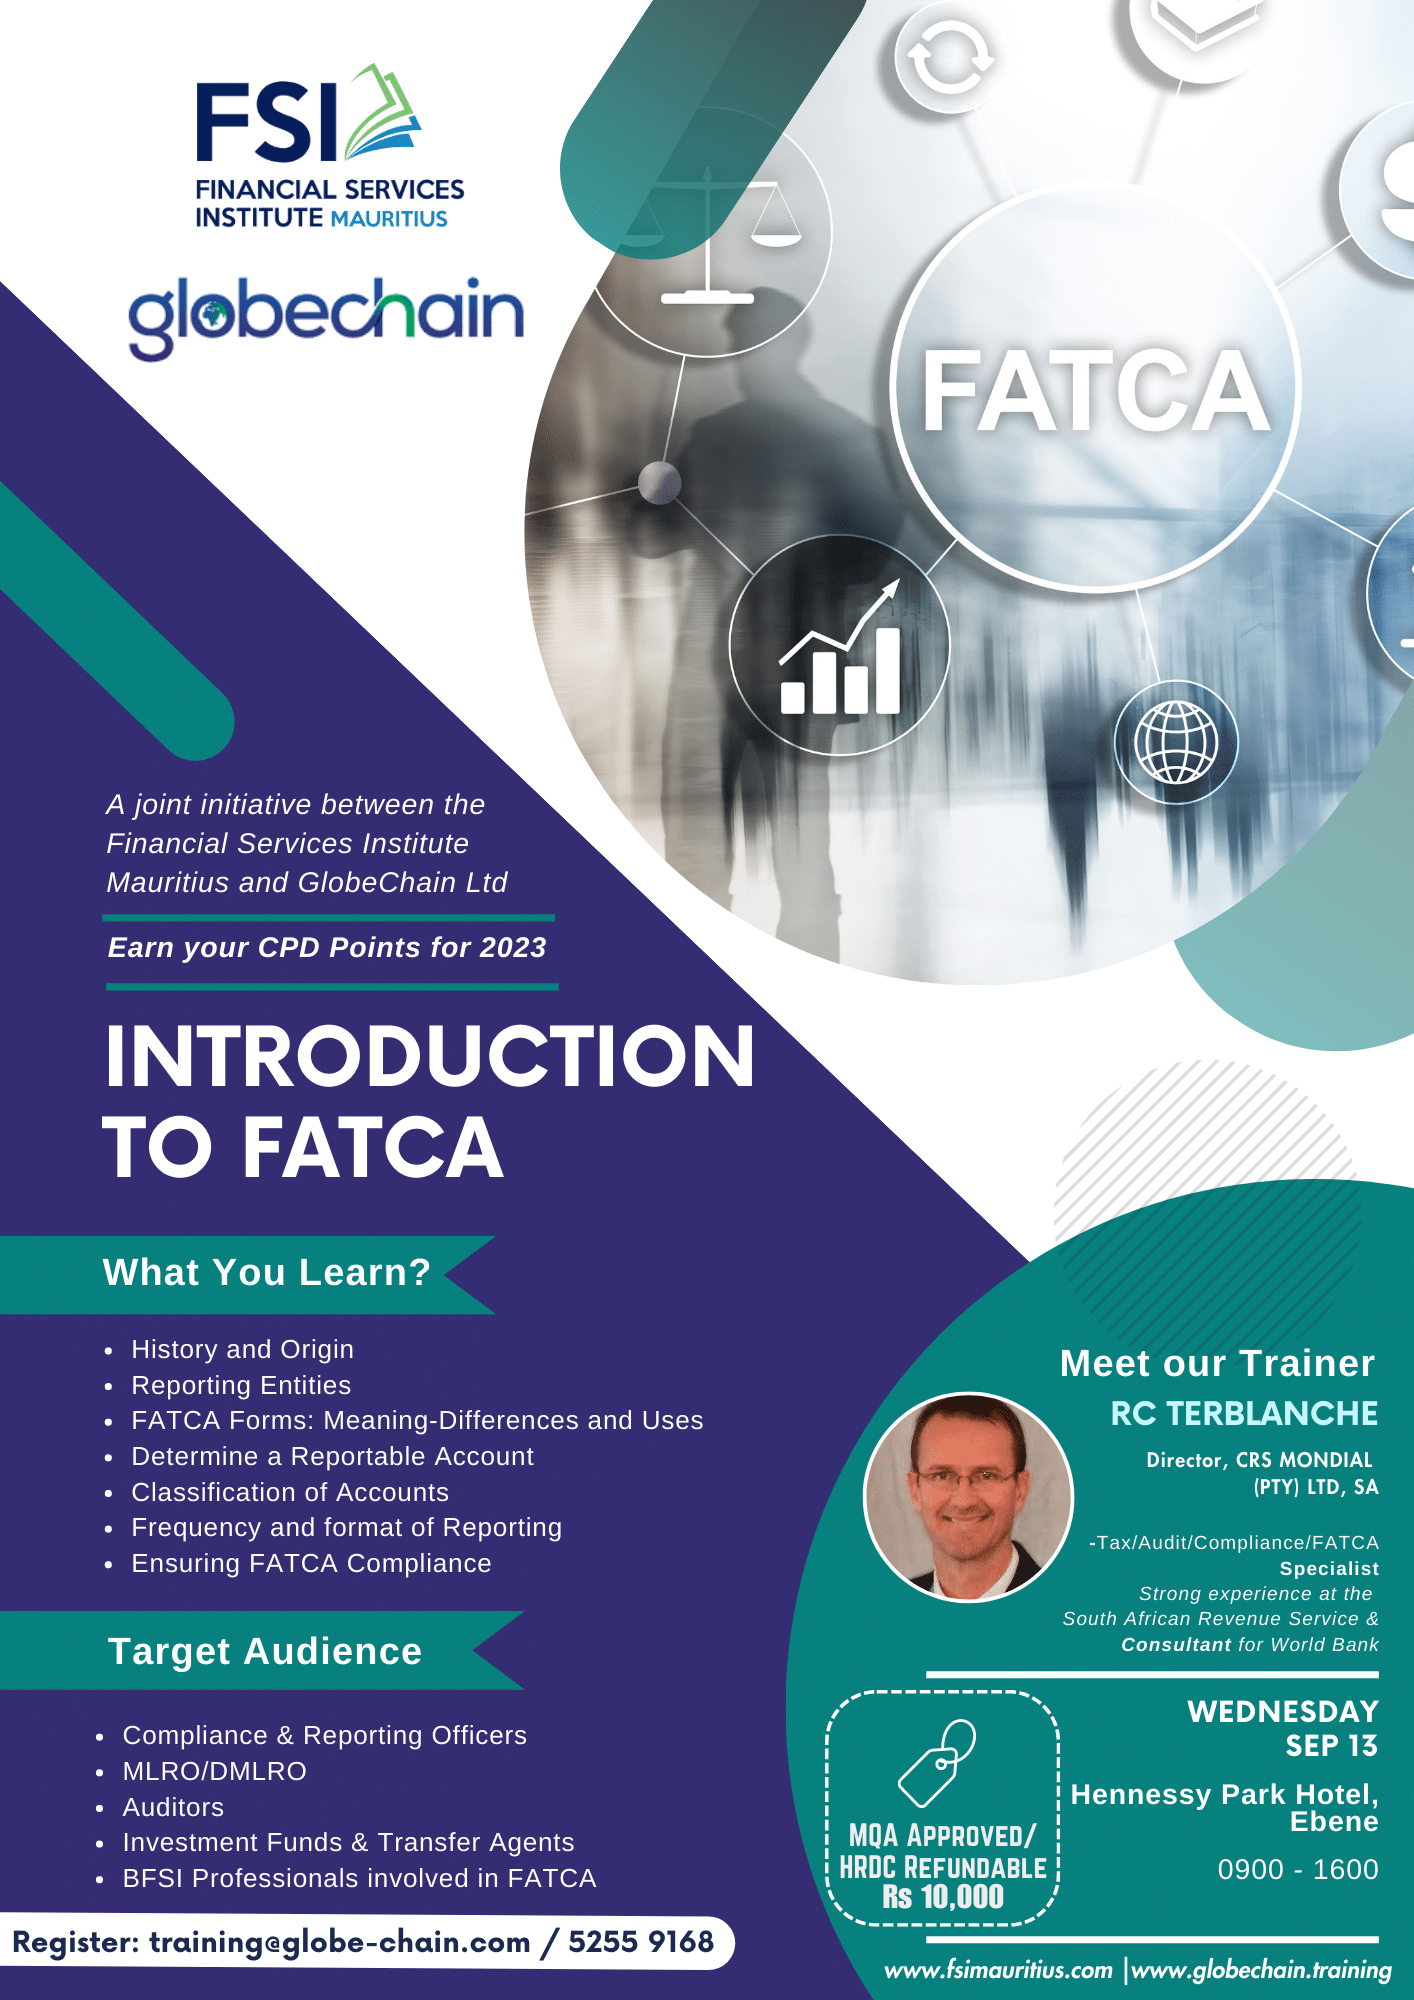 Introduction to FATCA